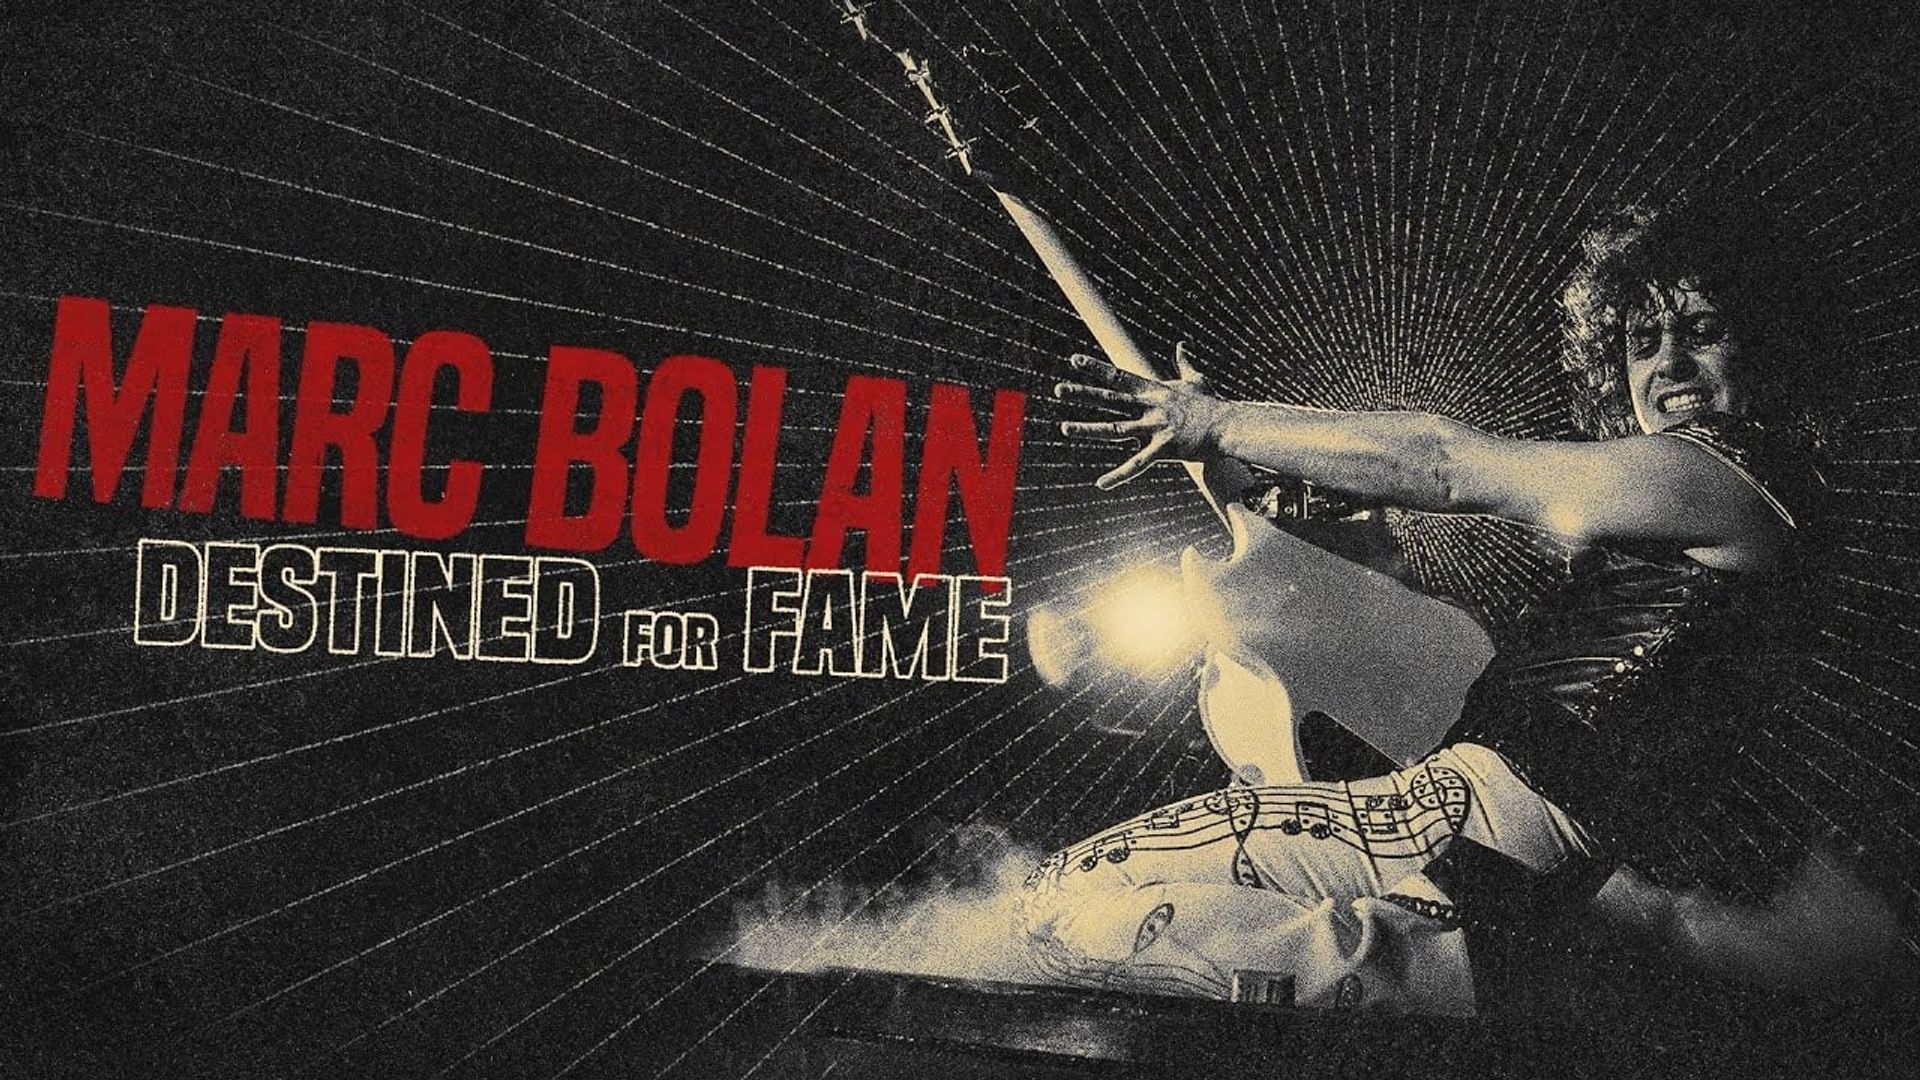 Marc Bolan: Destined for Fame background